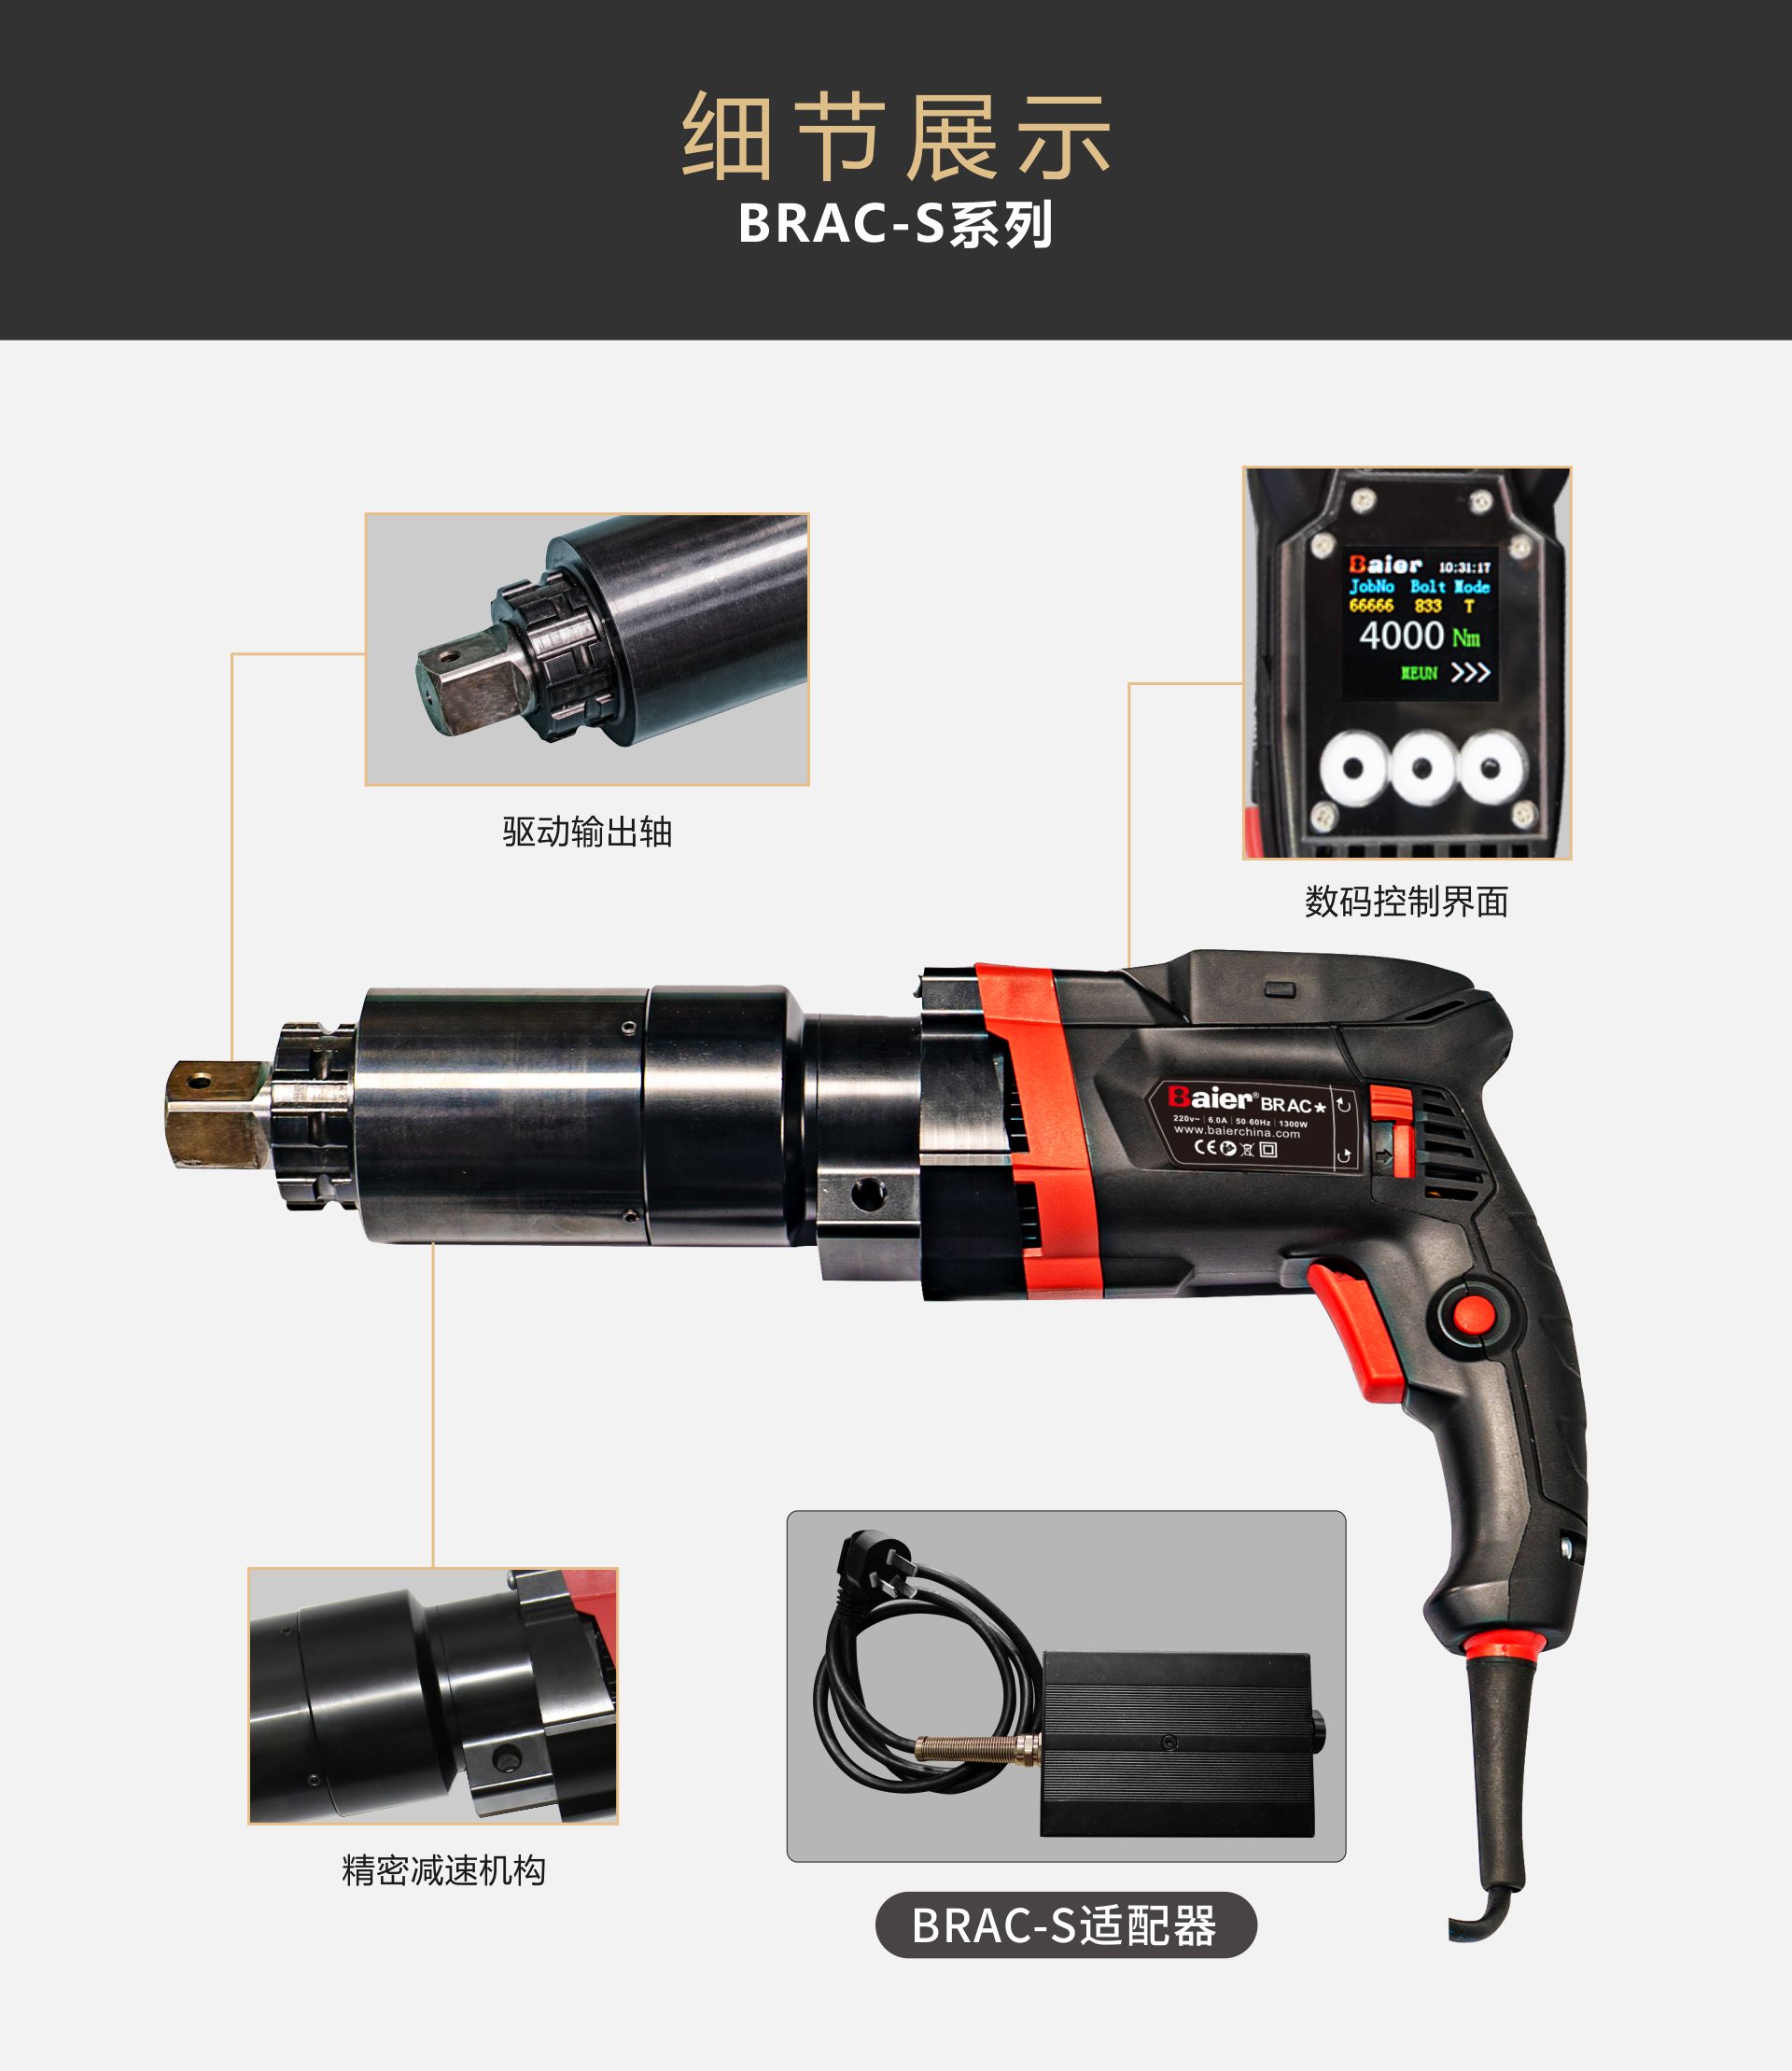 BRAC-S系列插电式电动扭矩扳手